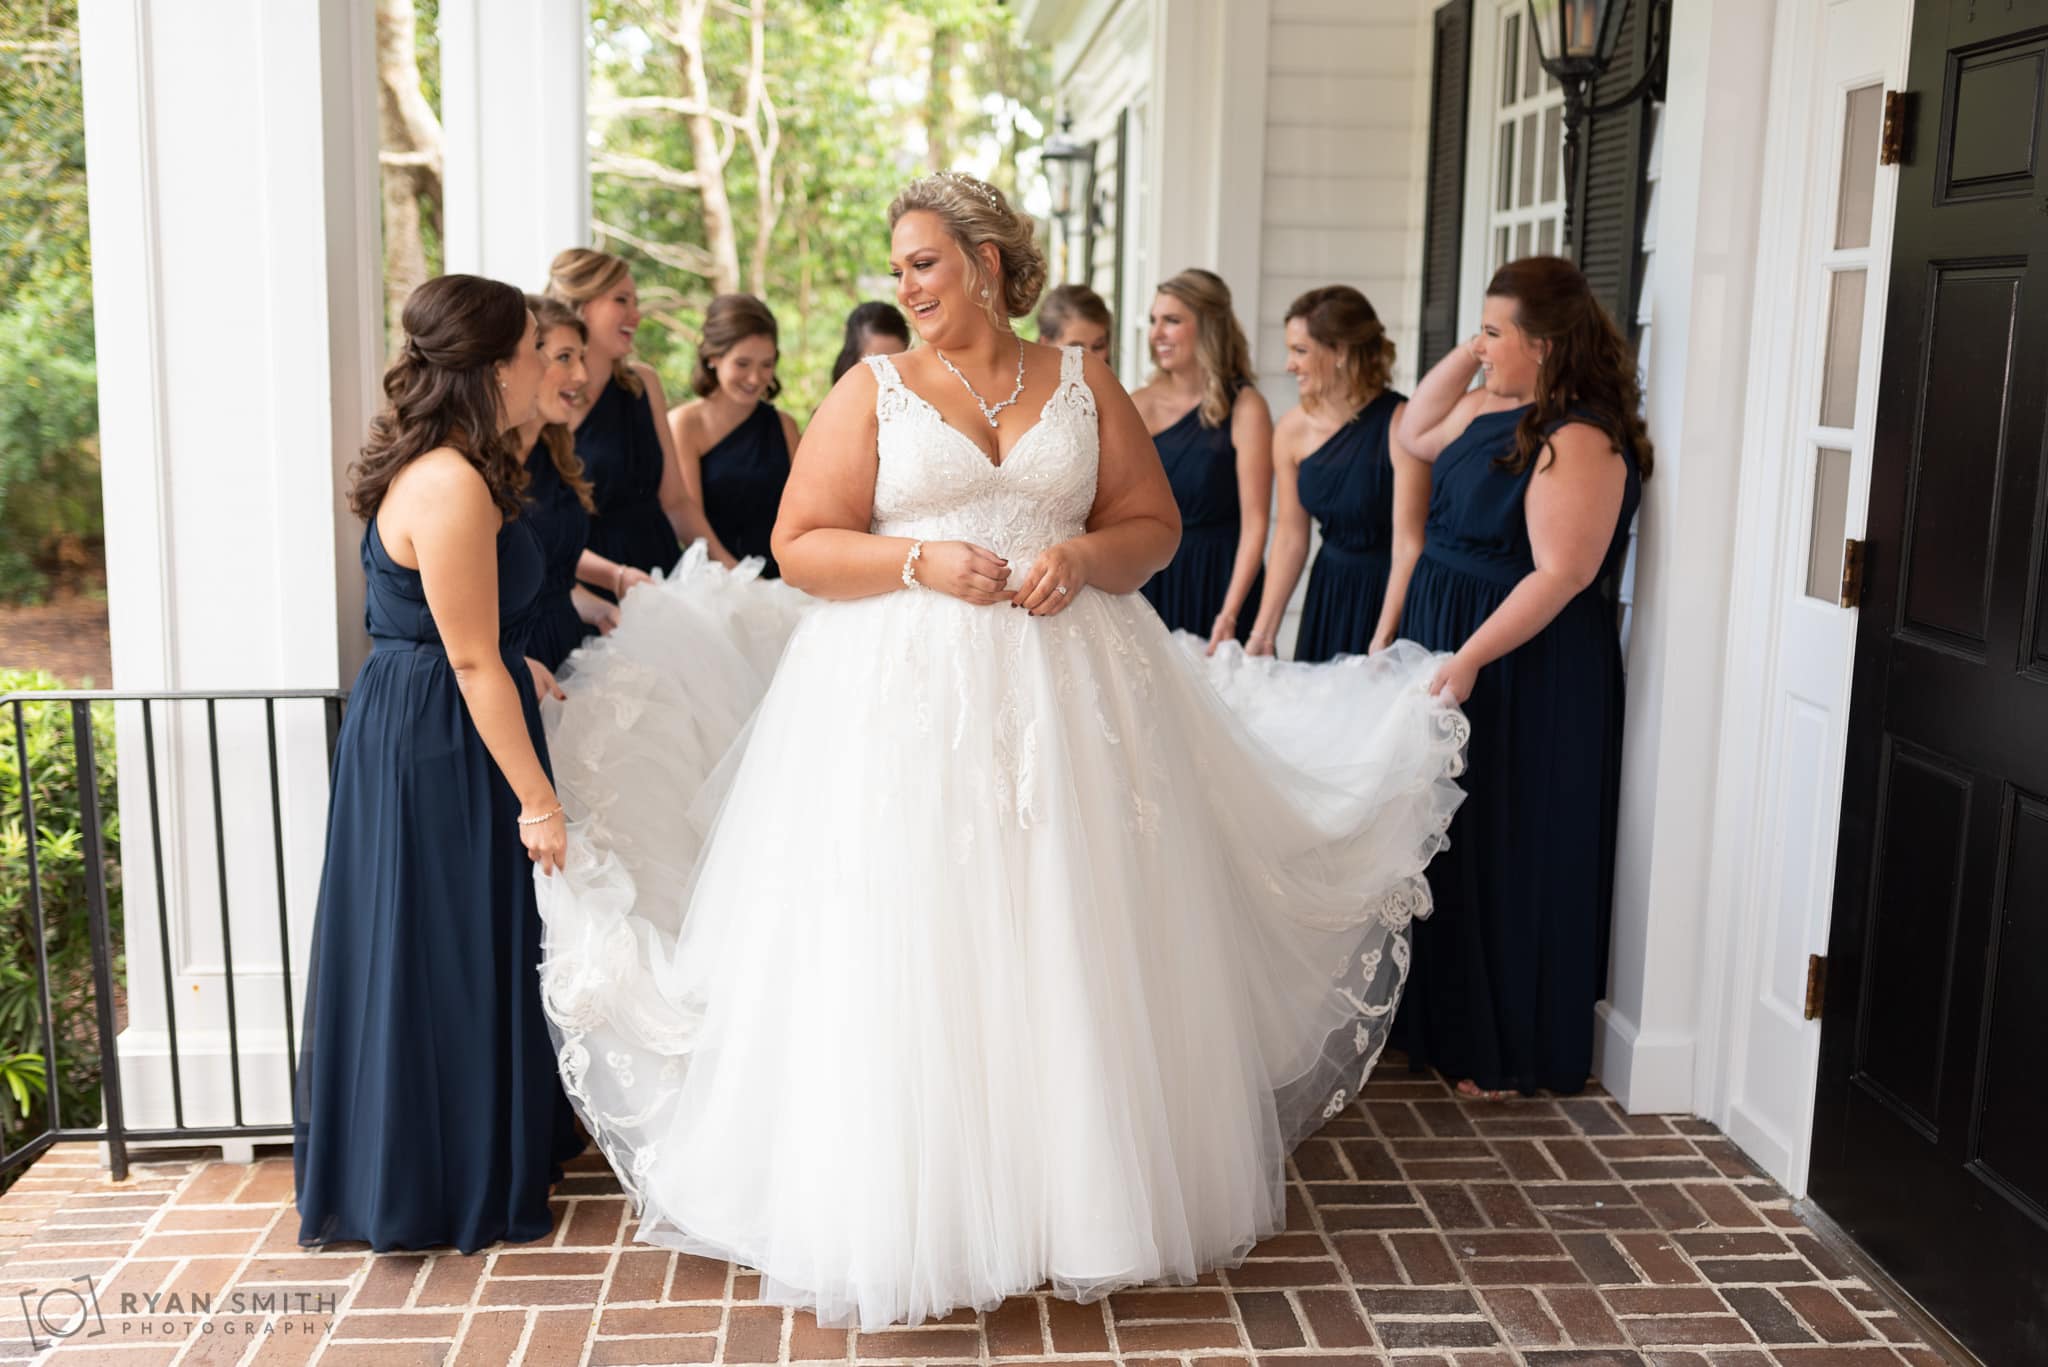 Bridesmaids fluffing bride's dress